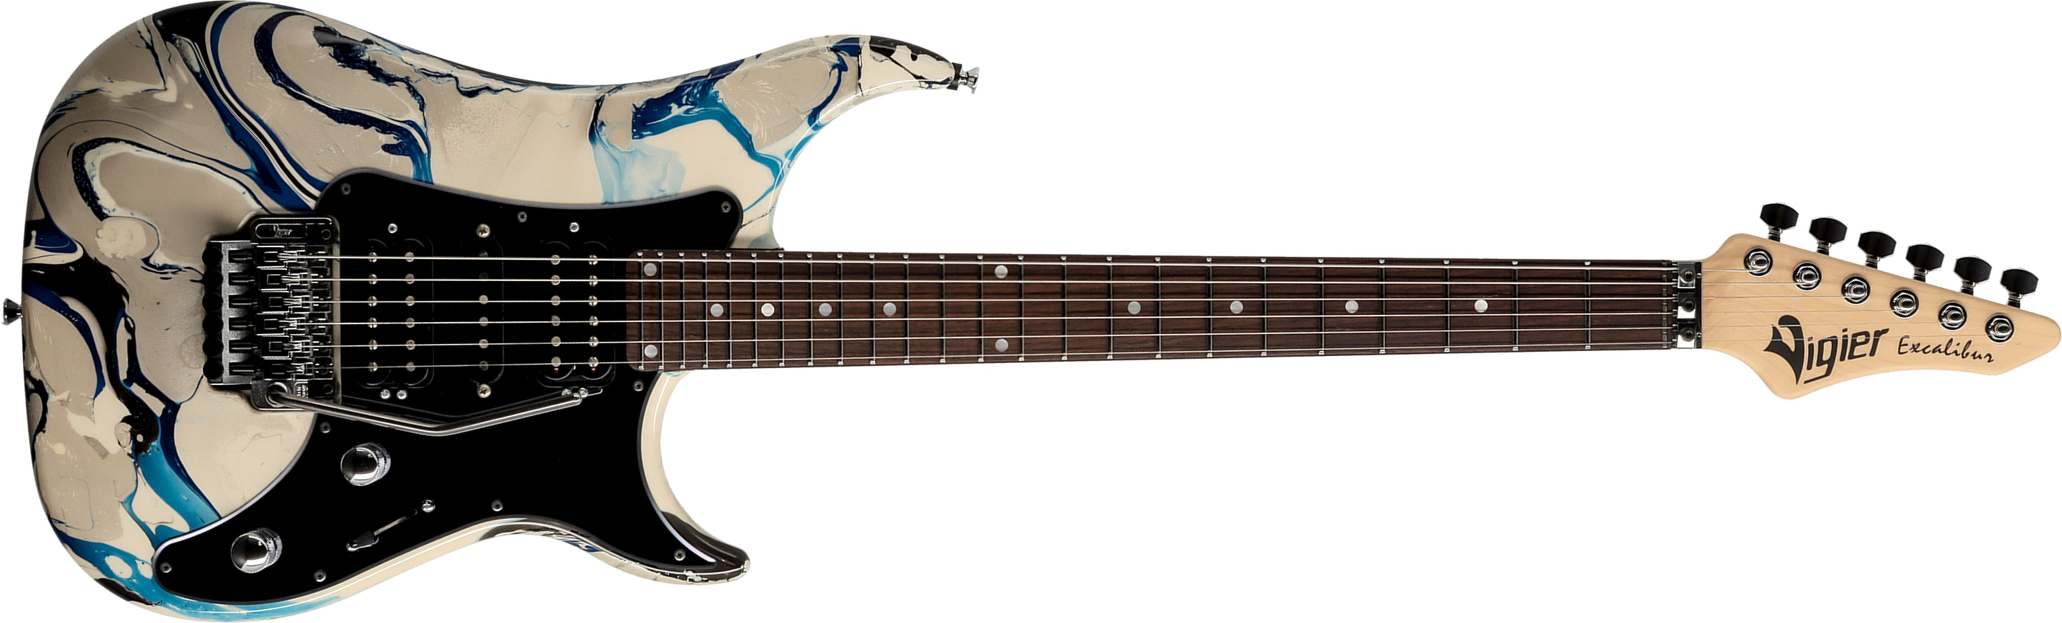 Vigier Excalibur Original Hsh Fr Rw - Rock Art Grey Blue - Elektrische gitaar in Str-vorm - Main picture